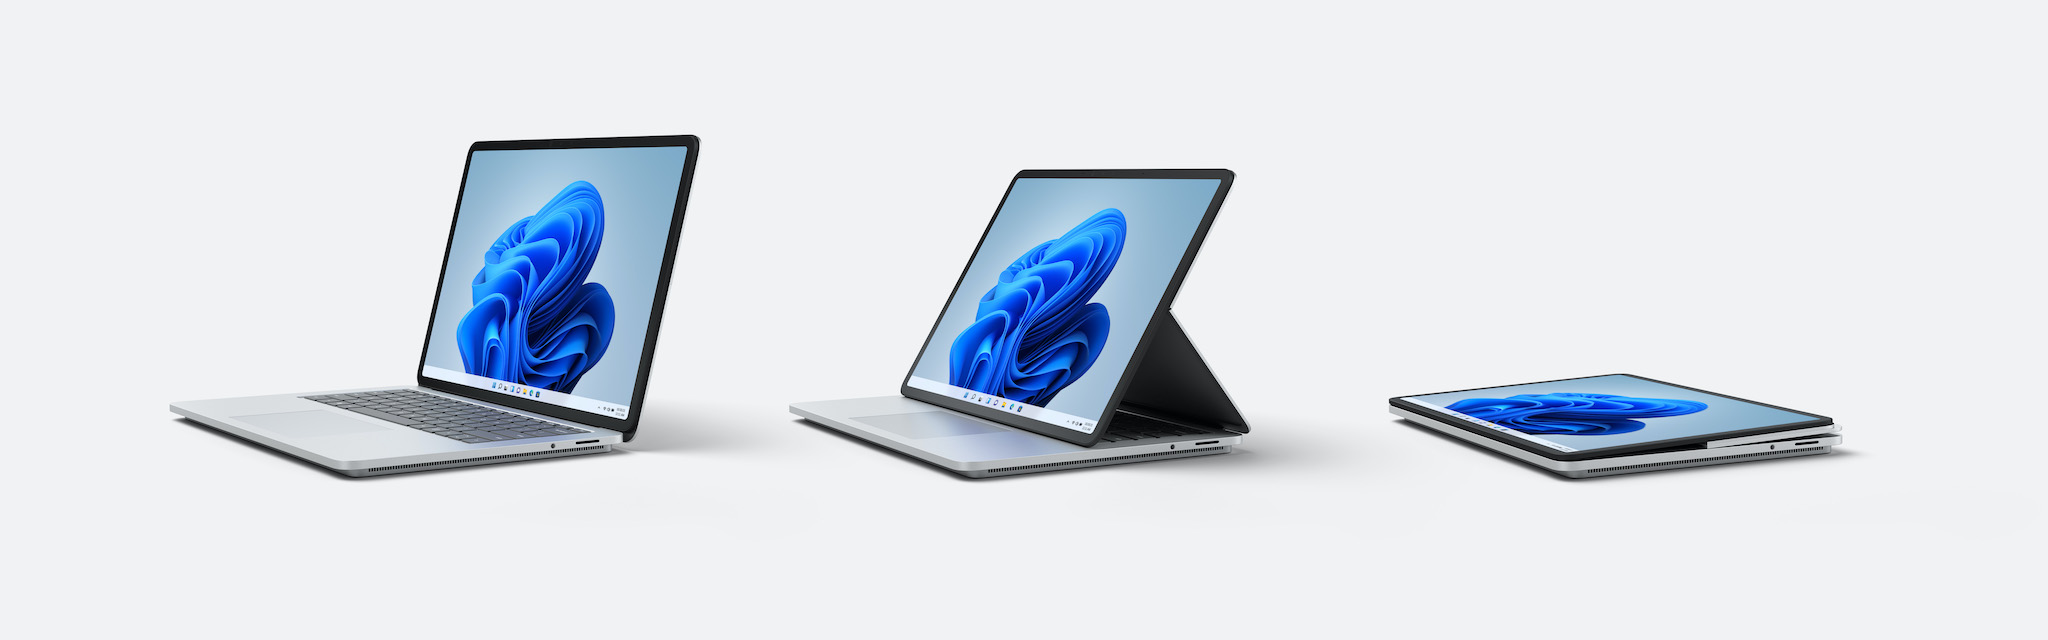 Surface Laptop Studio - Modes_under embargo until September 22.jpg